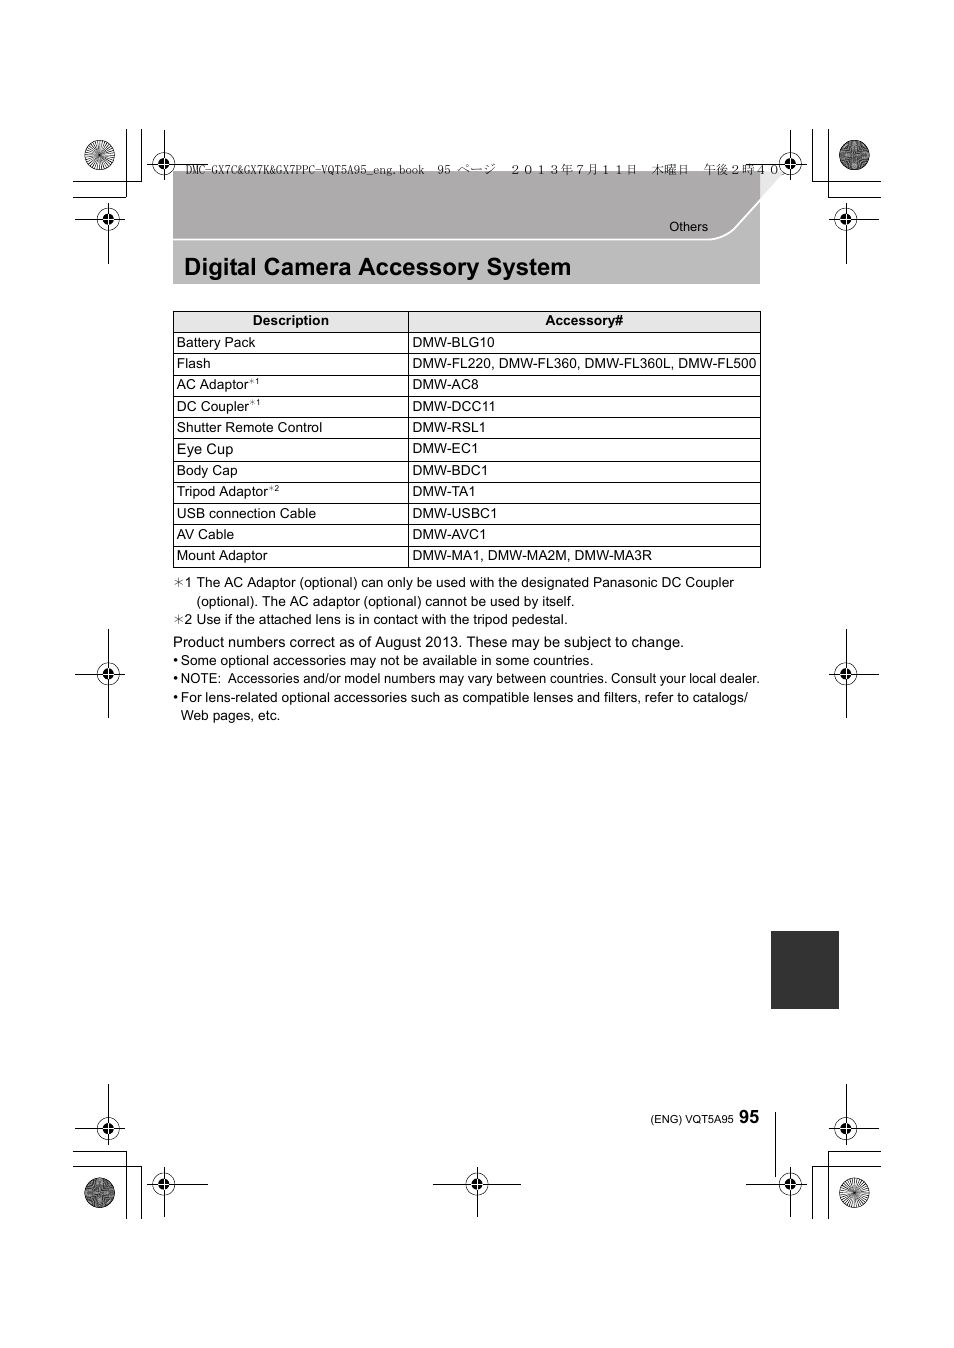 Digital camera accessory system | Panasonic DMC-GX7SBODY User Manual | Page 95 / 104